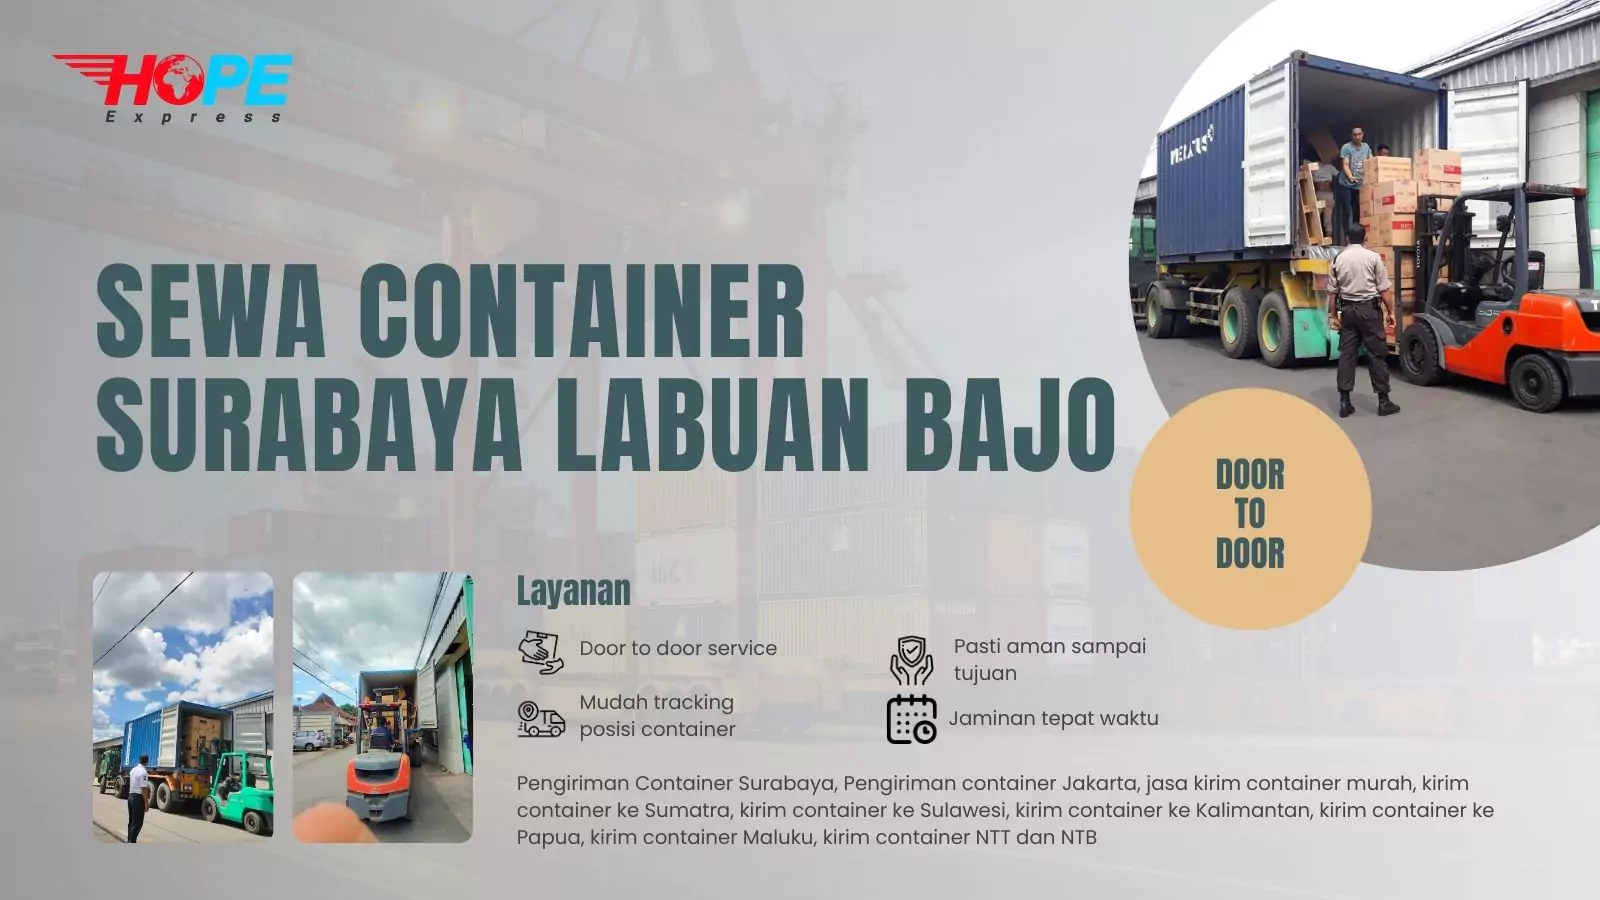 Sewa Container Surabaya Labuan Bajo